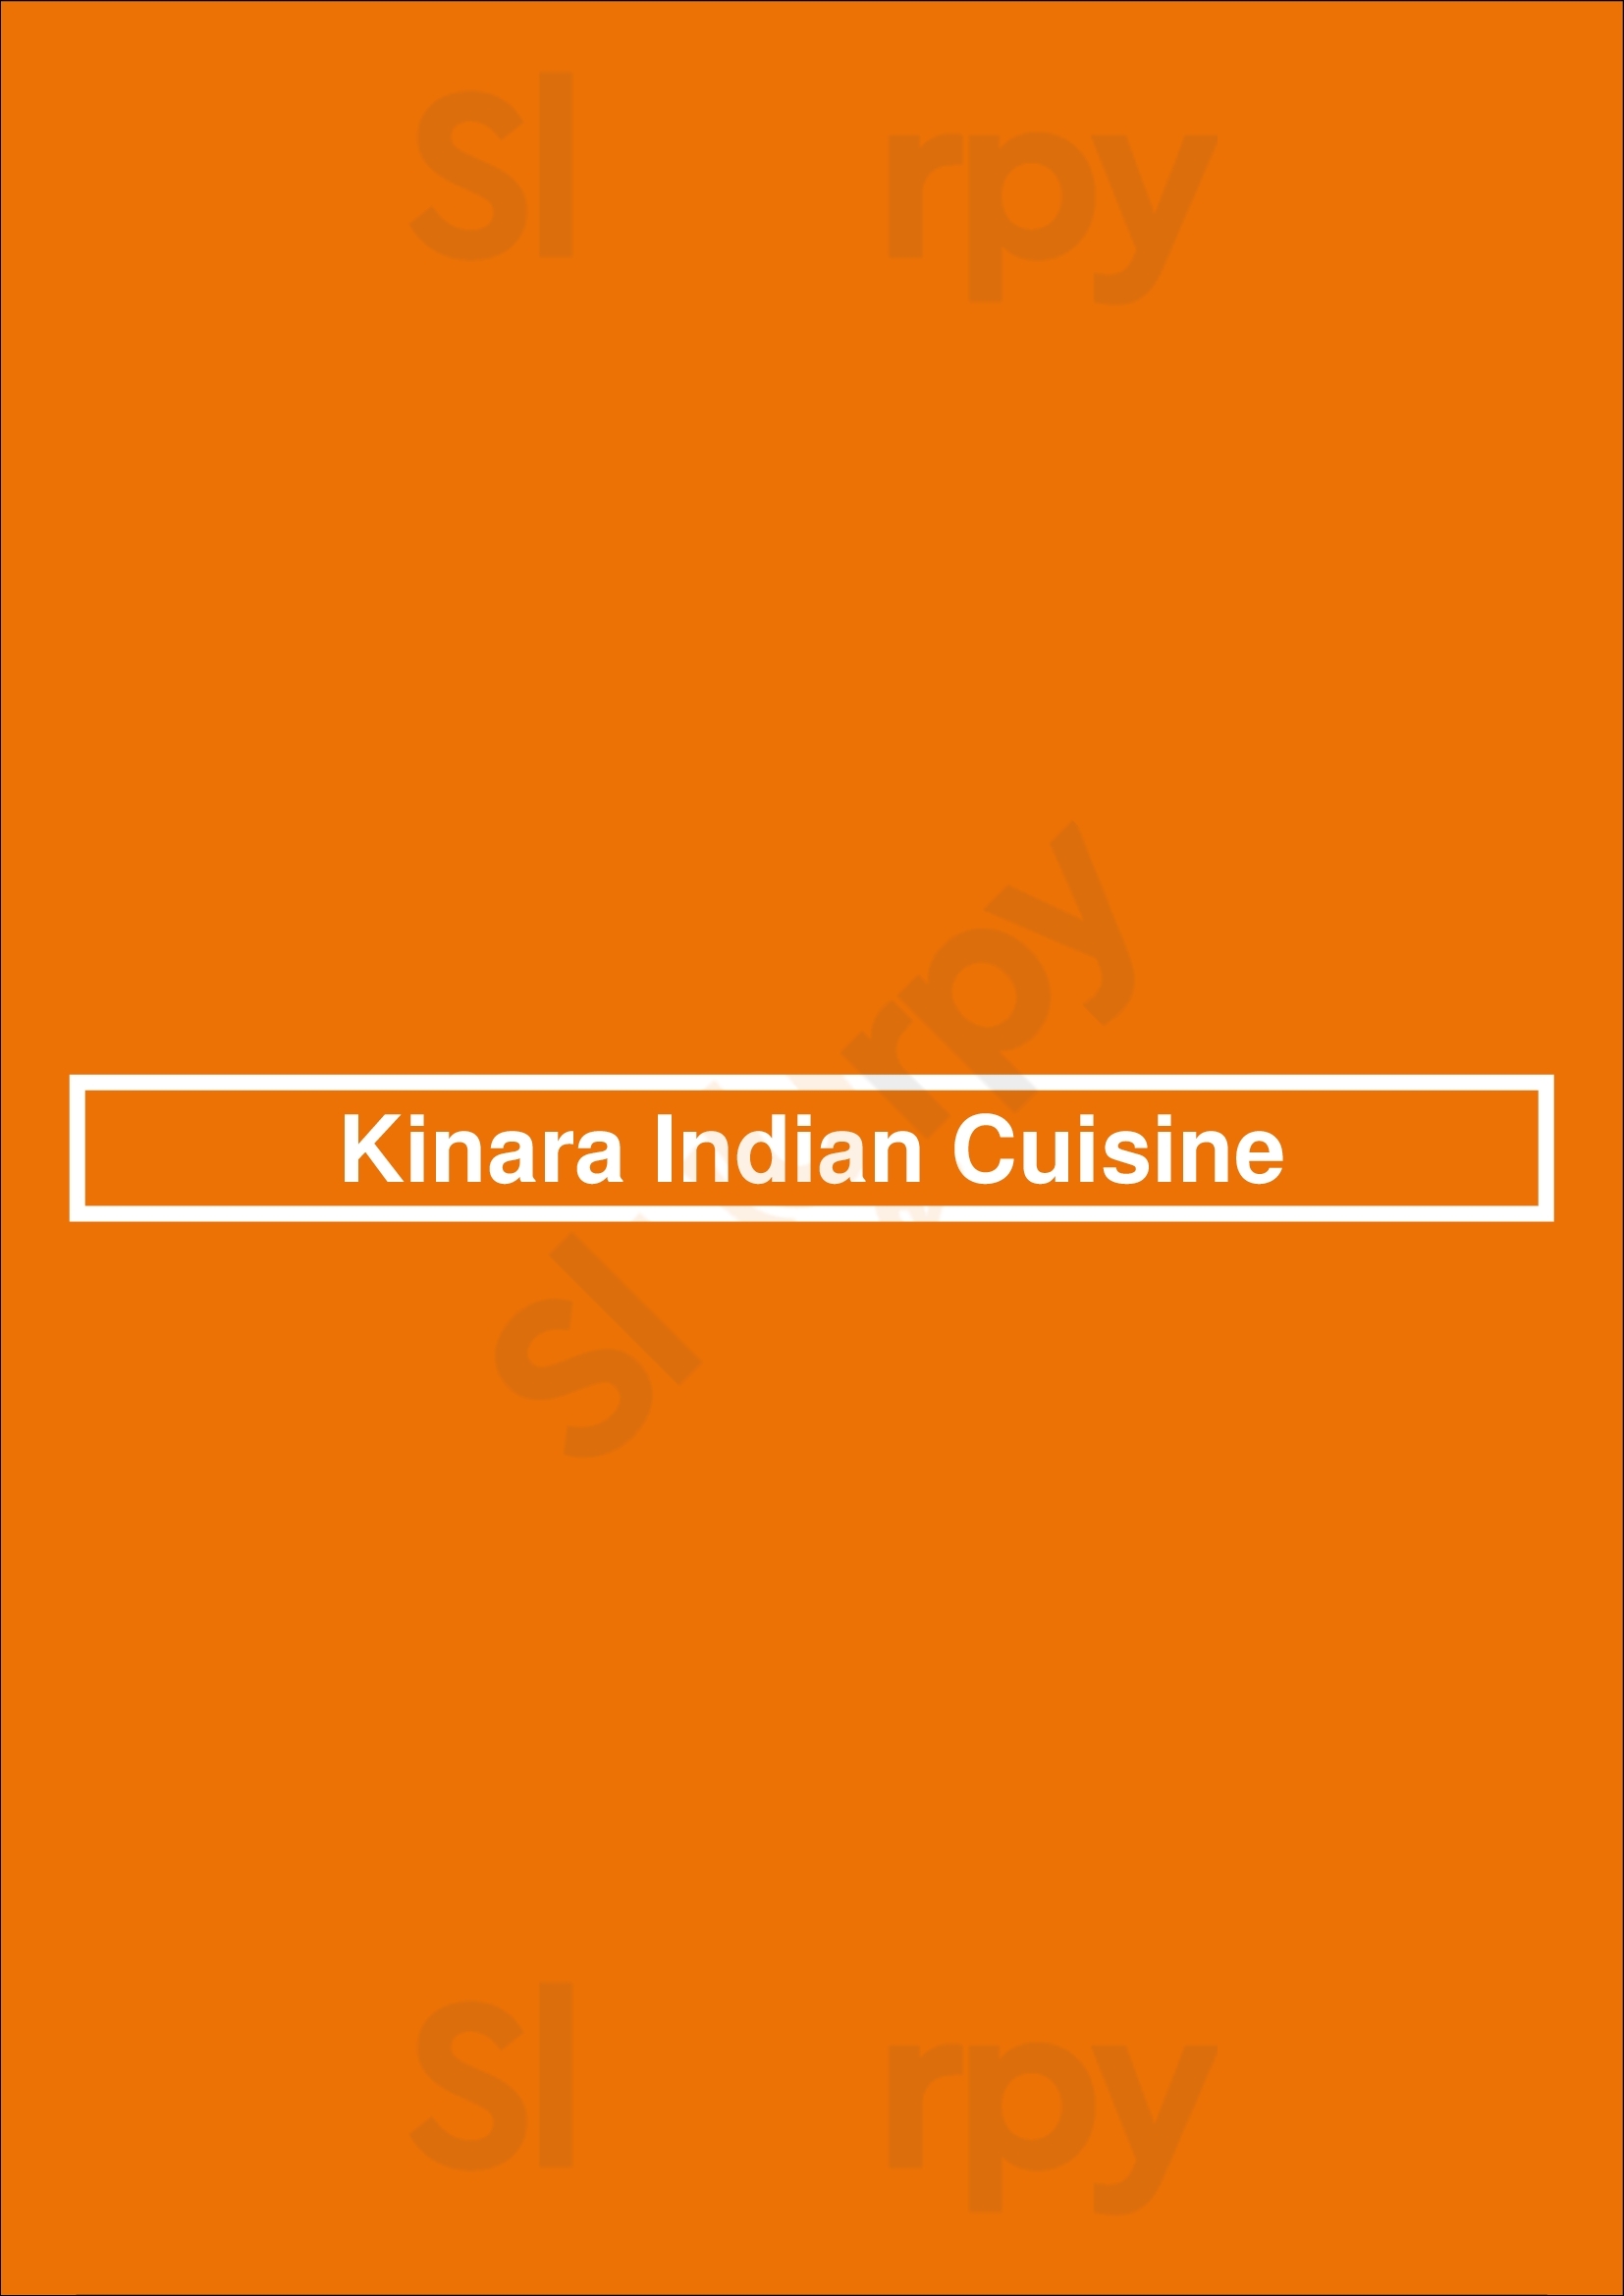 Kinara Indian Cuisine Vancouver Menu - 1